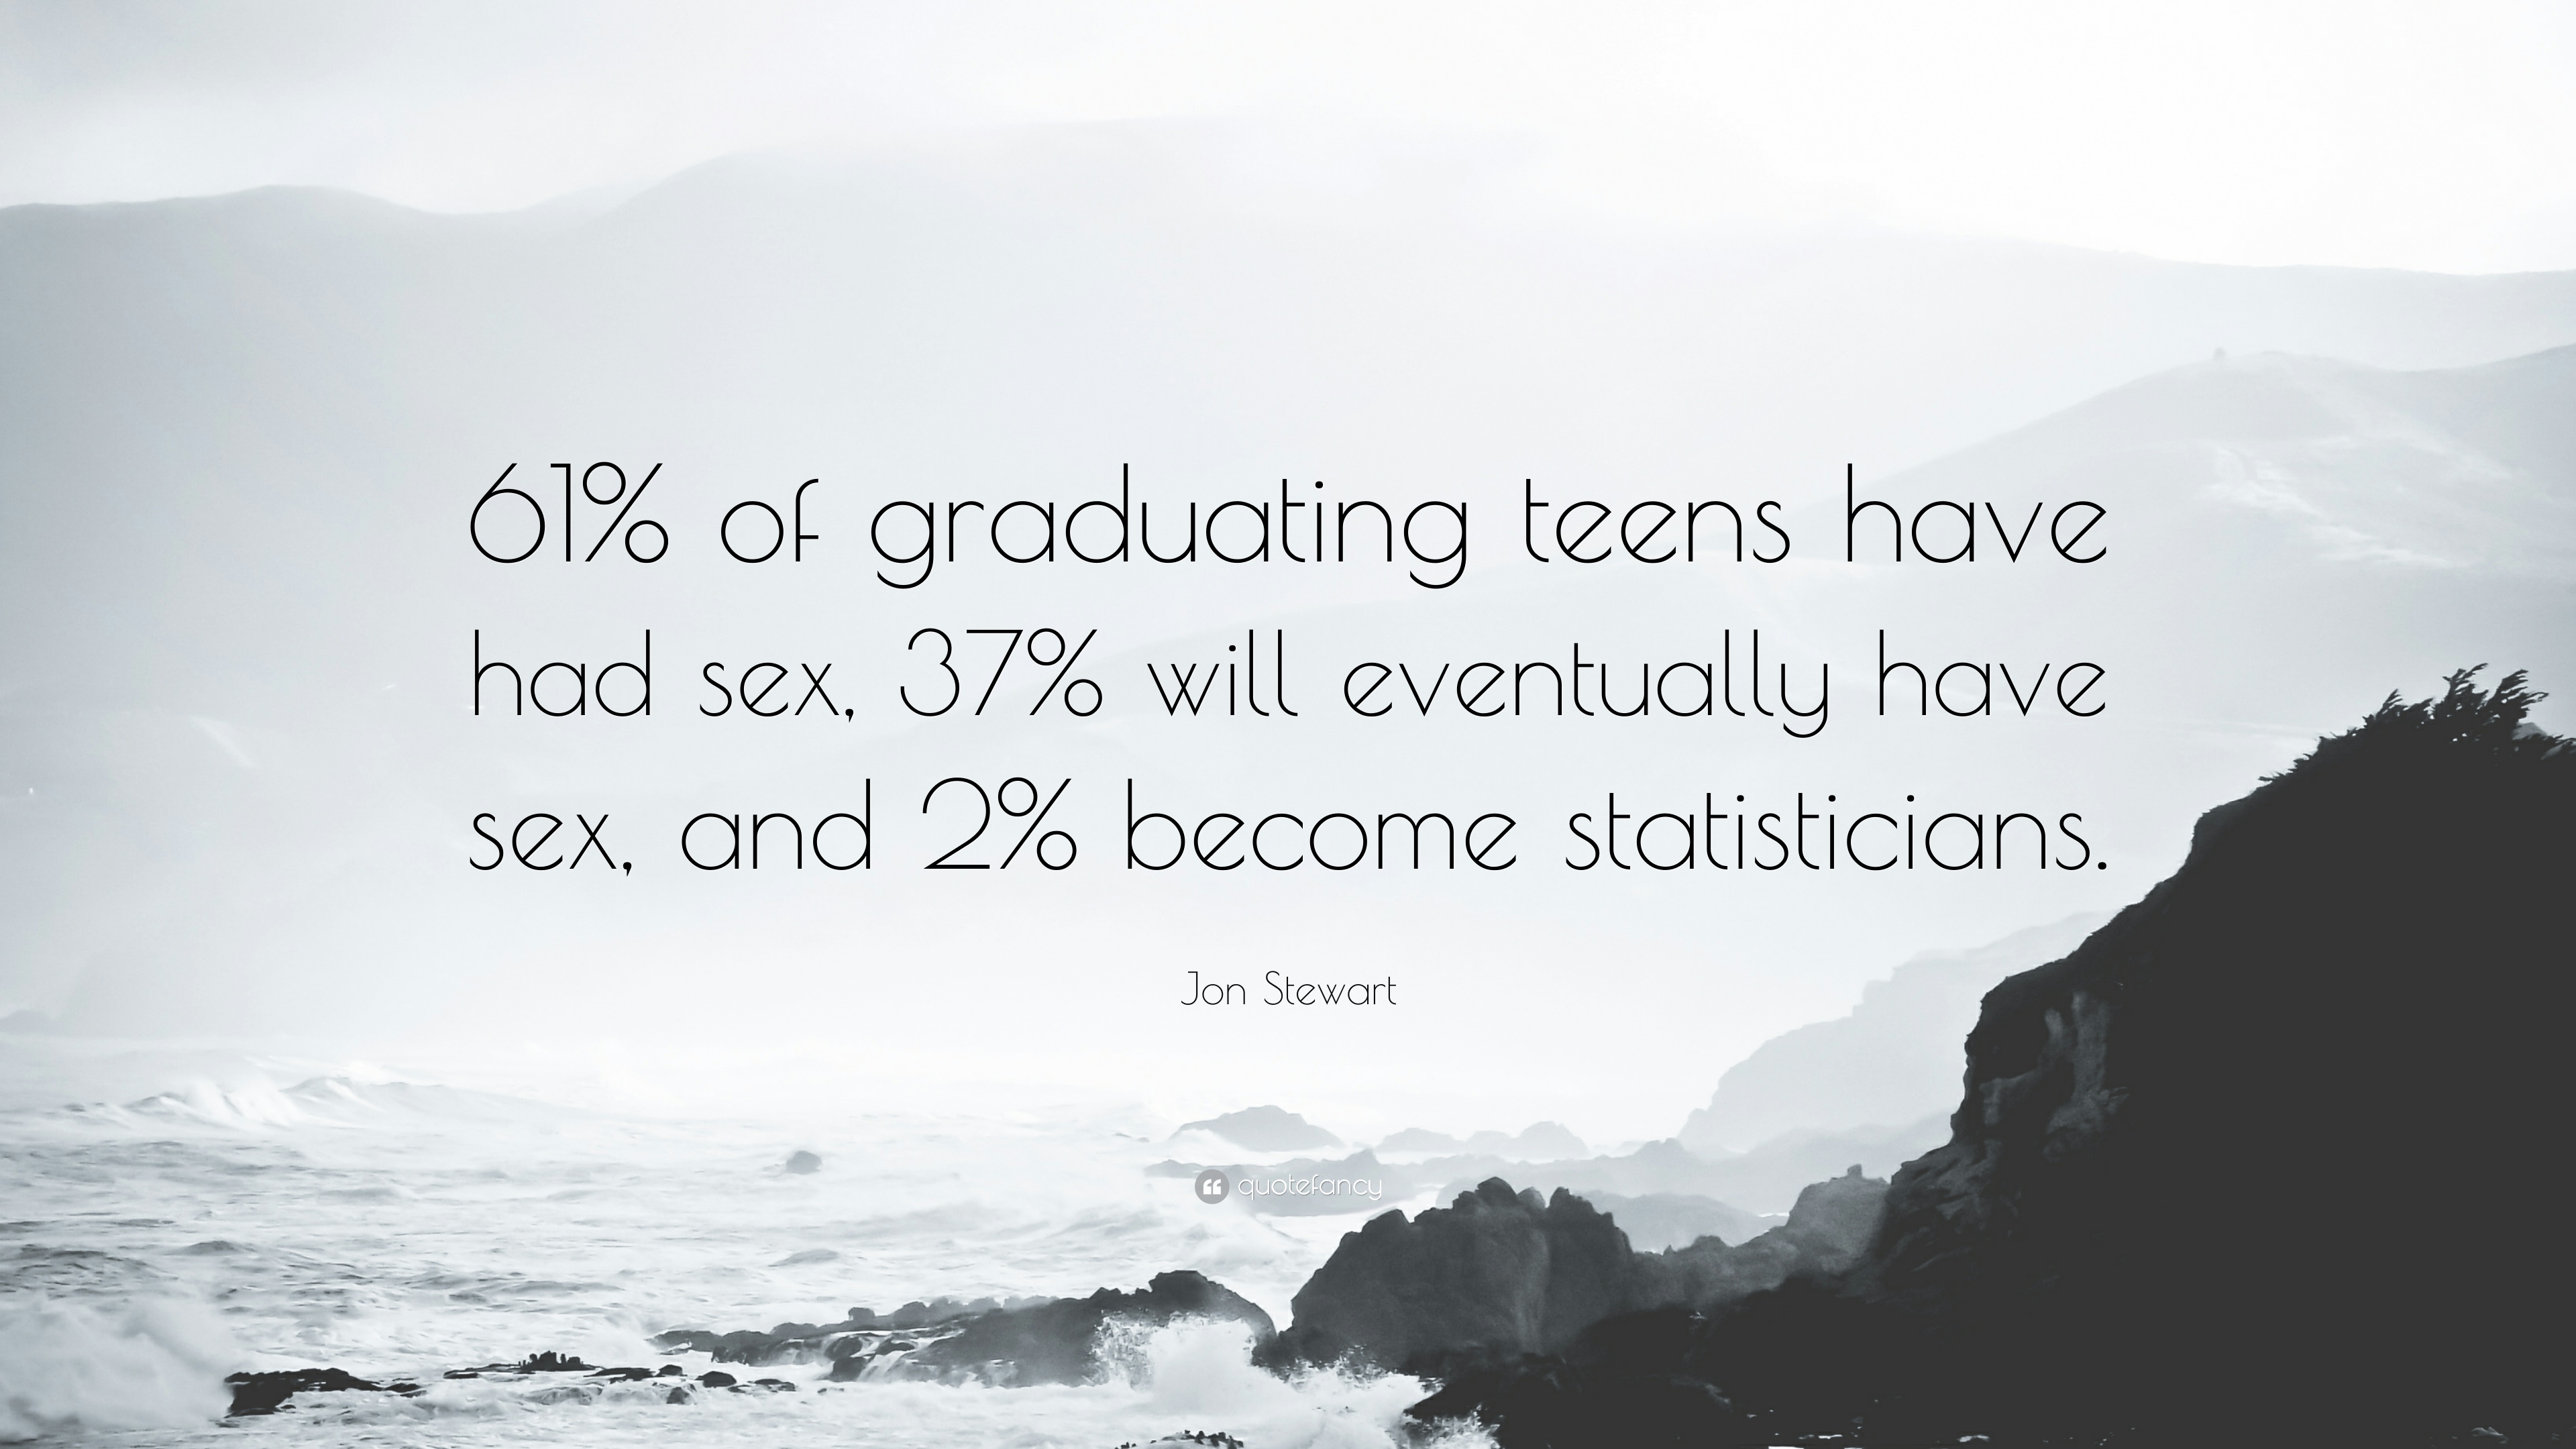 Jon Stewart Quote: “61% of graduating teens have had sex, 37% will